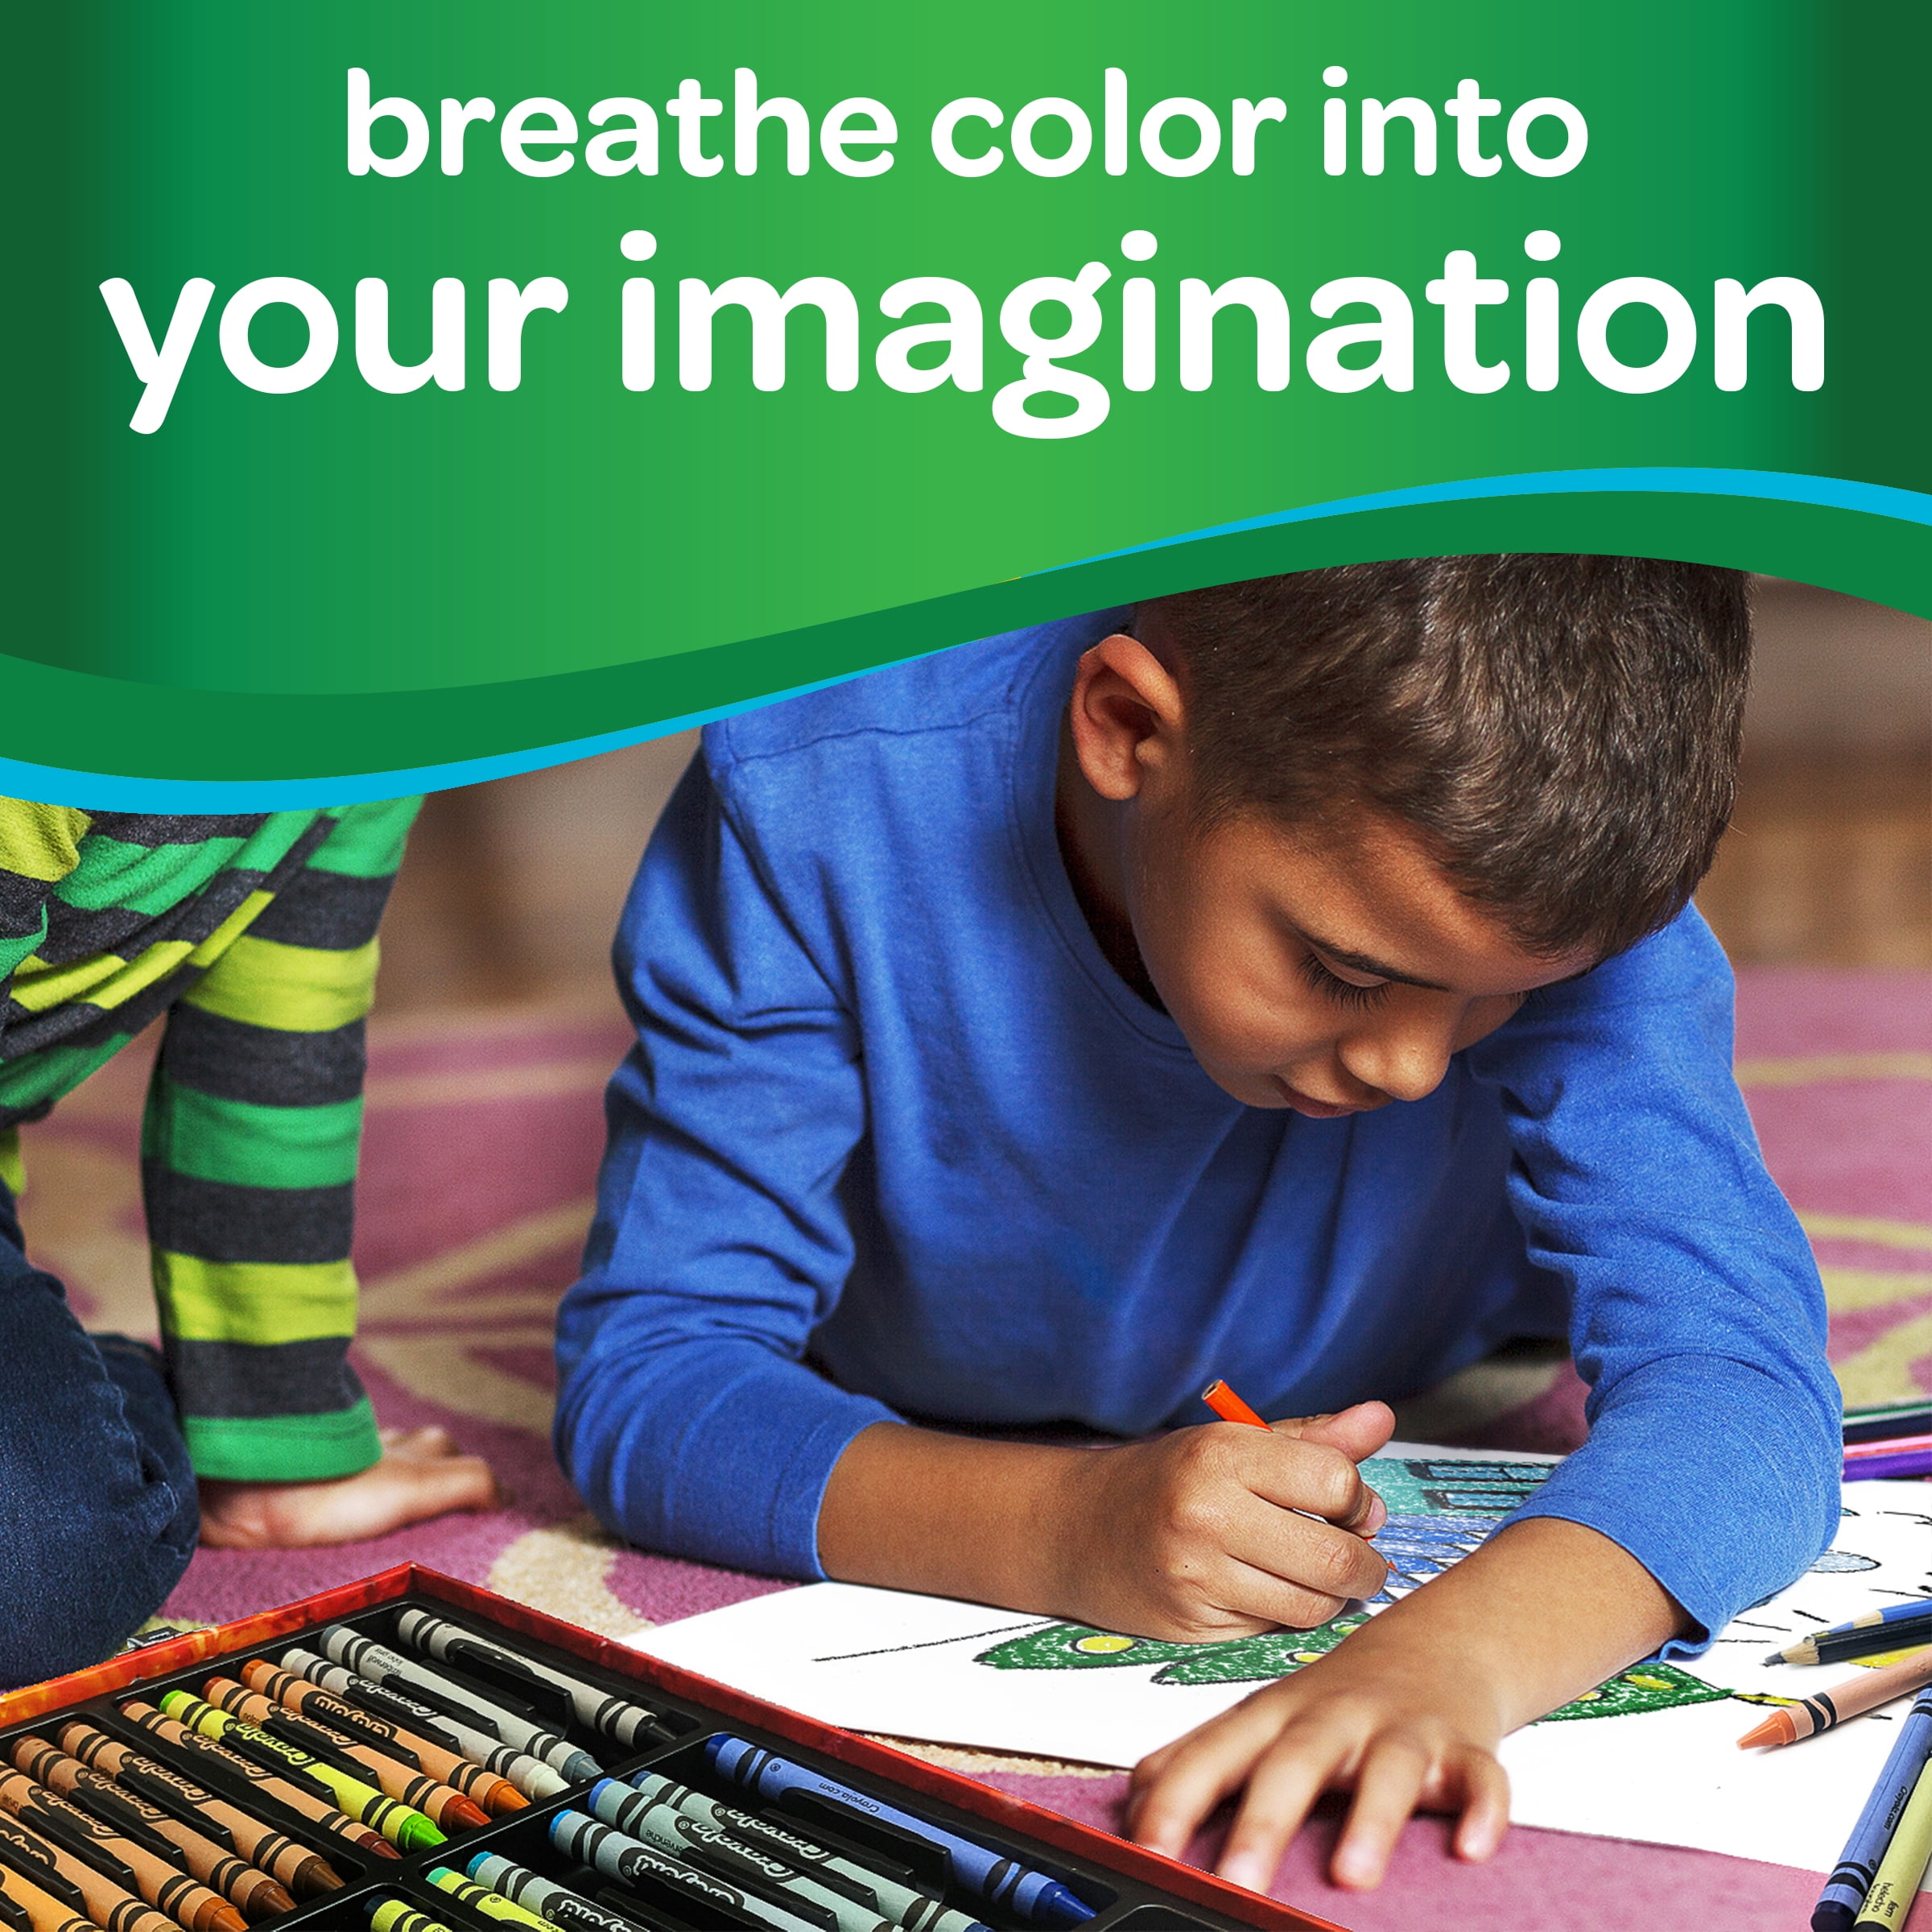 Inspiration Art Case, 1 unit – Crayola : Arts and crafts